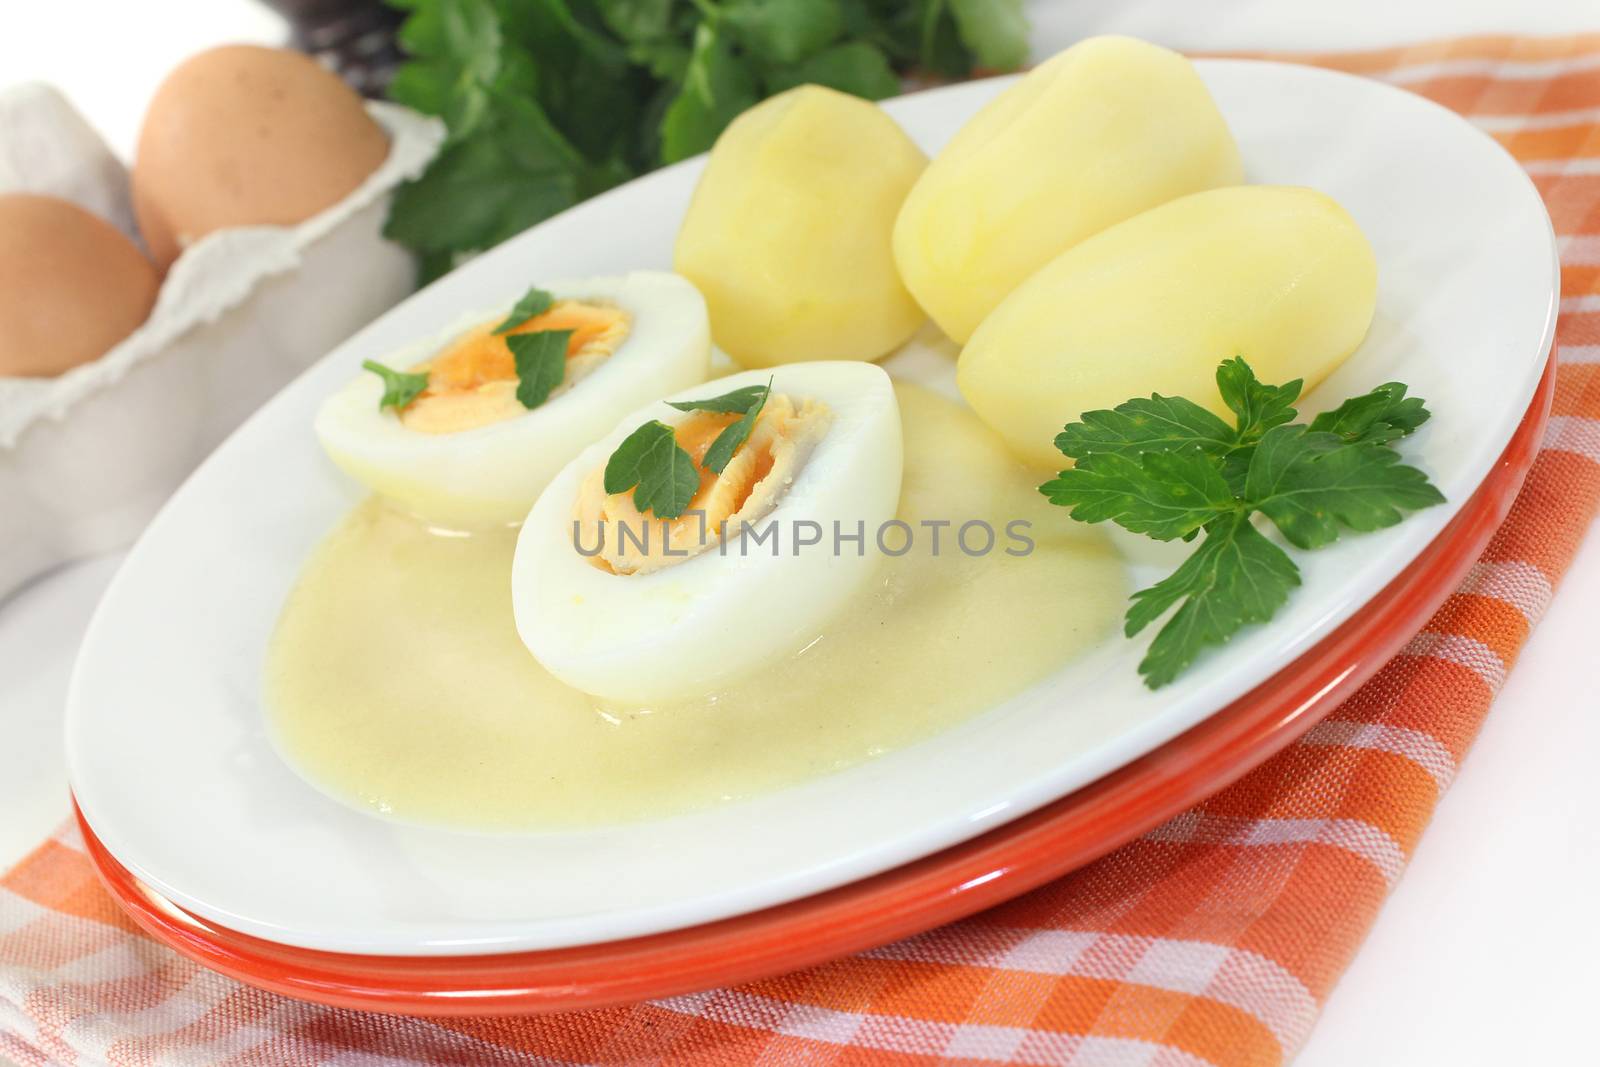 mustard eggs by silencefoto